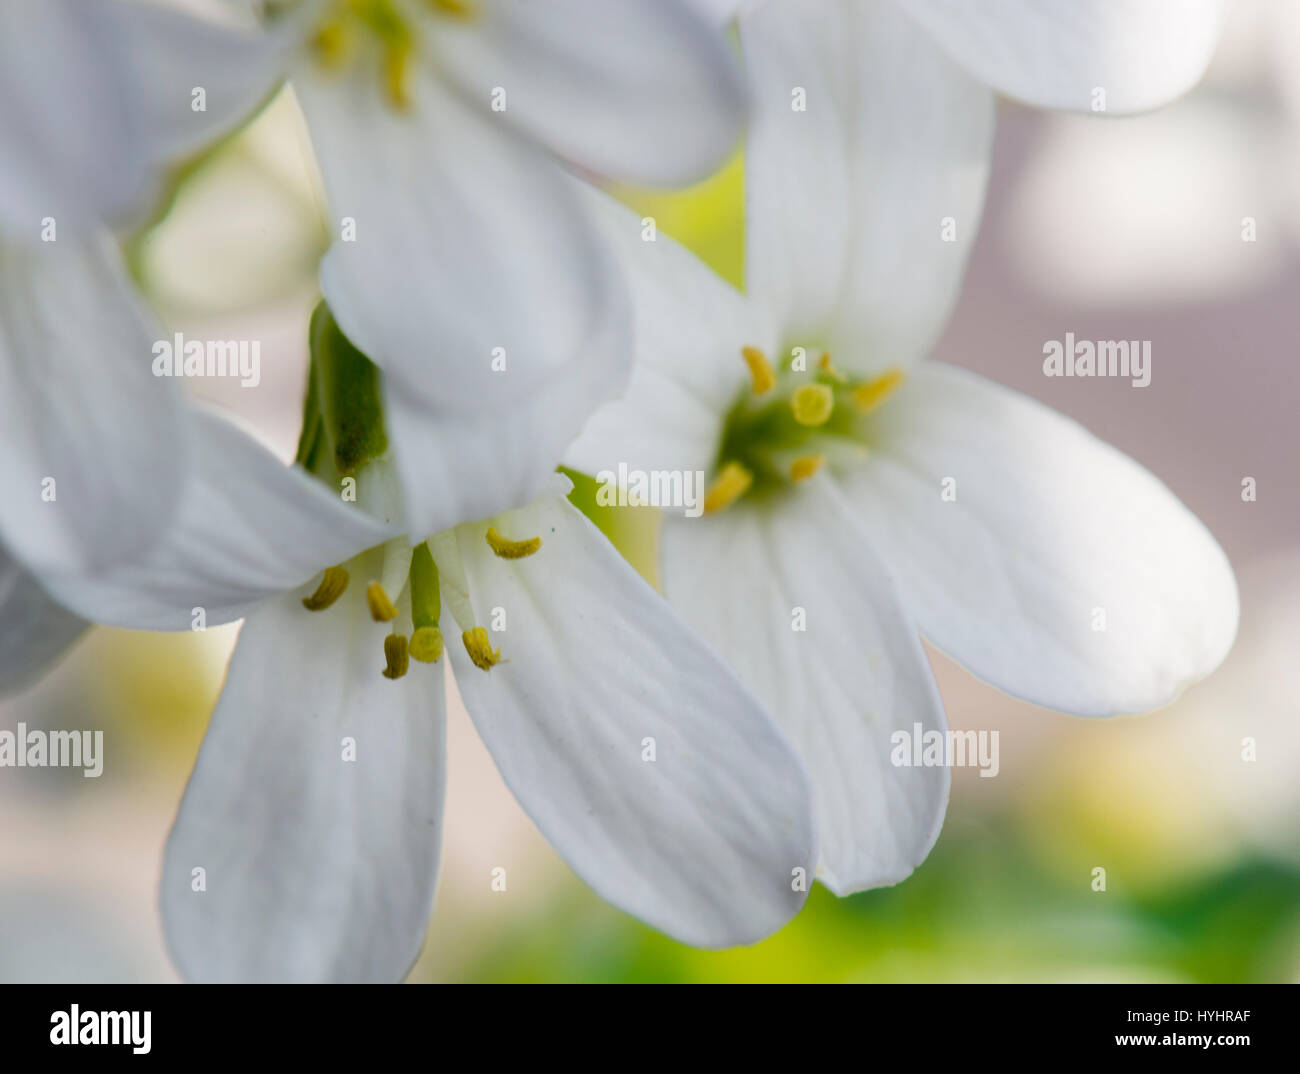 Iberis flowers in close up Stock Photo